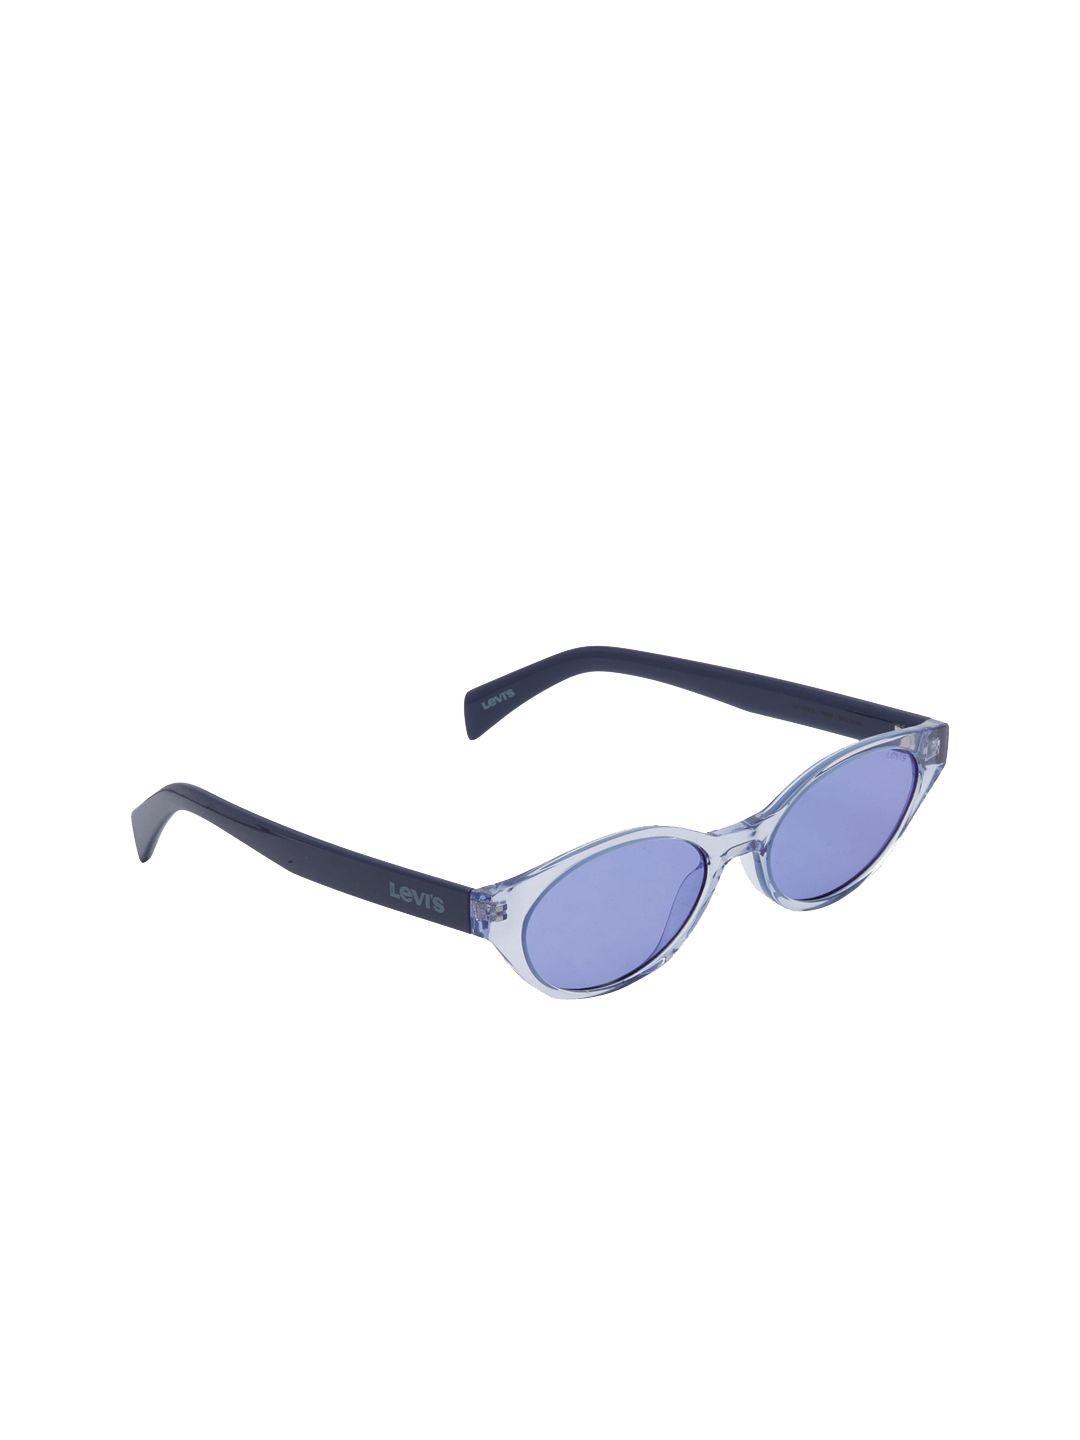 levis women blue cateye uv protected sunglasses lv 1003/s 789 5435